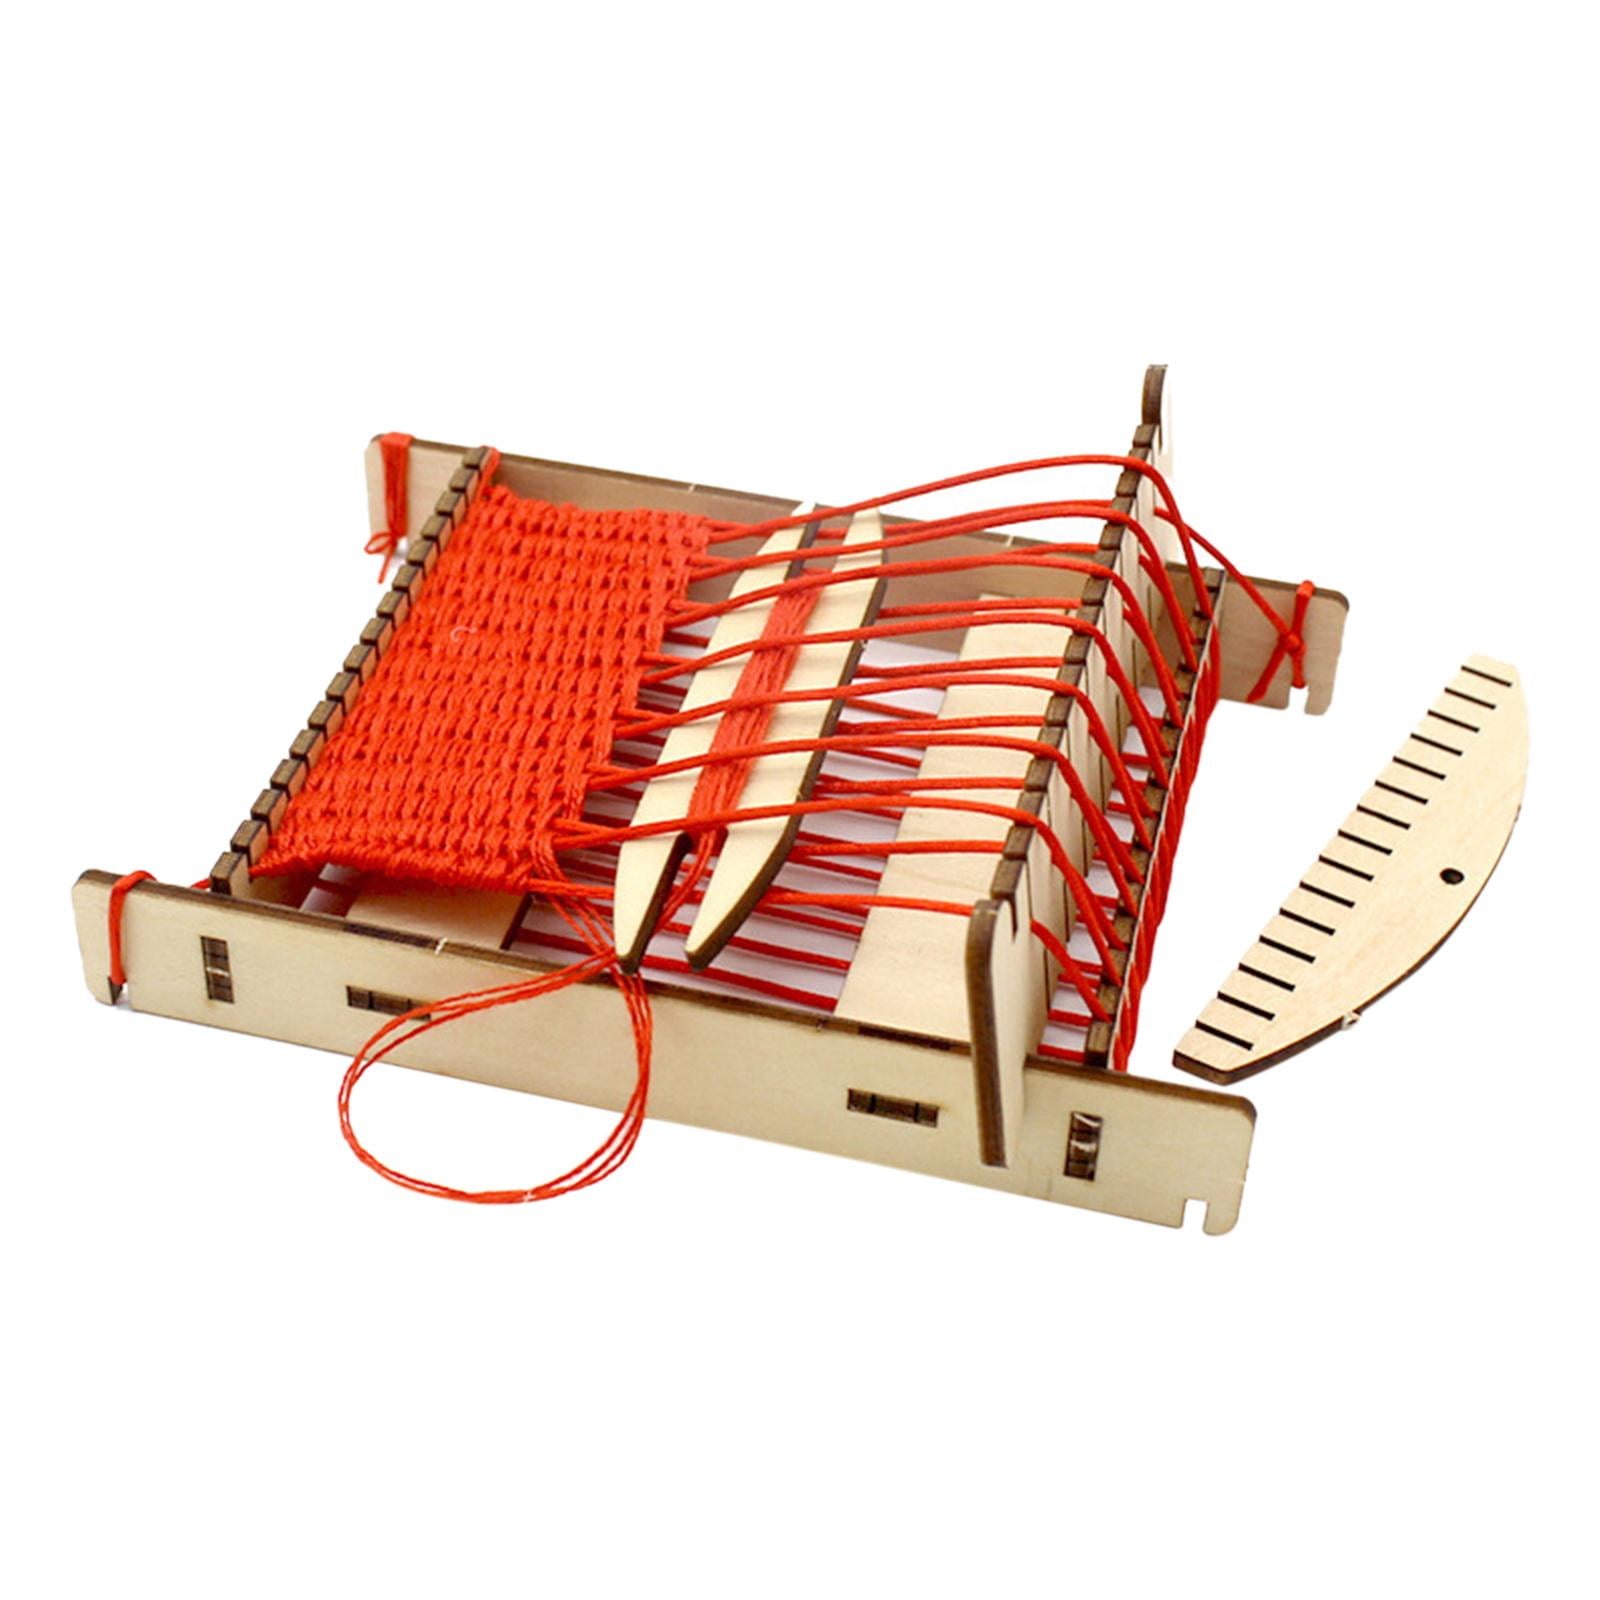 AZ Trading & Import PS689B Knitting Loom Machine Toy Playset, 1